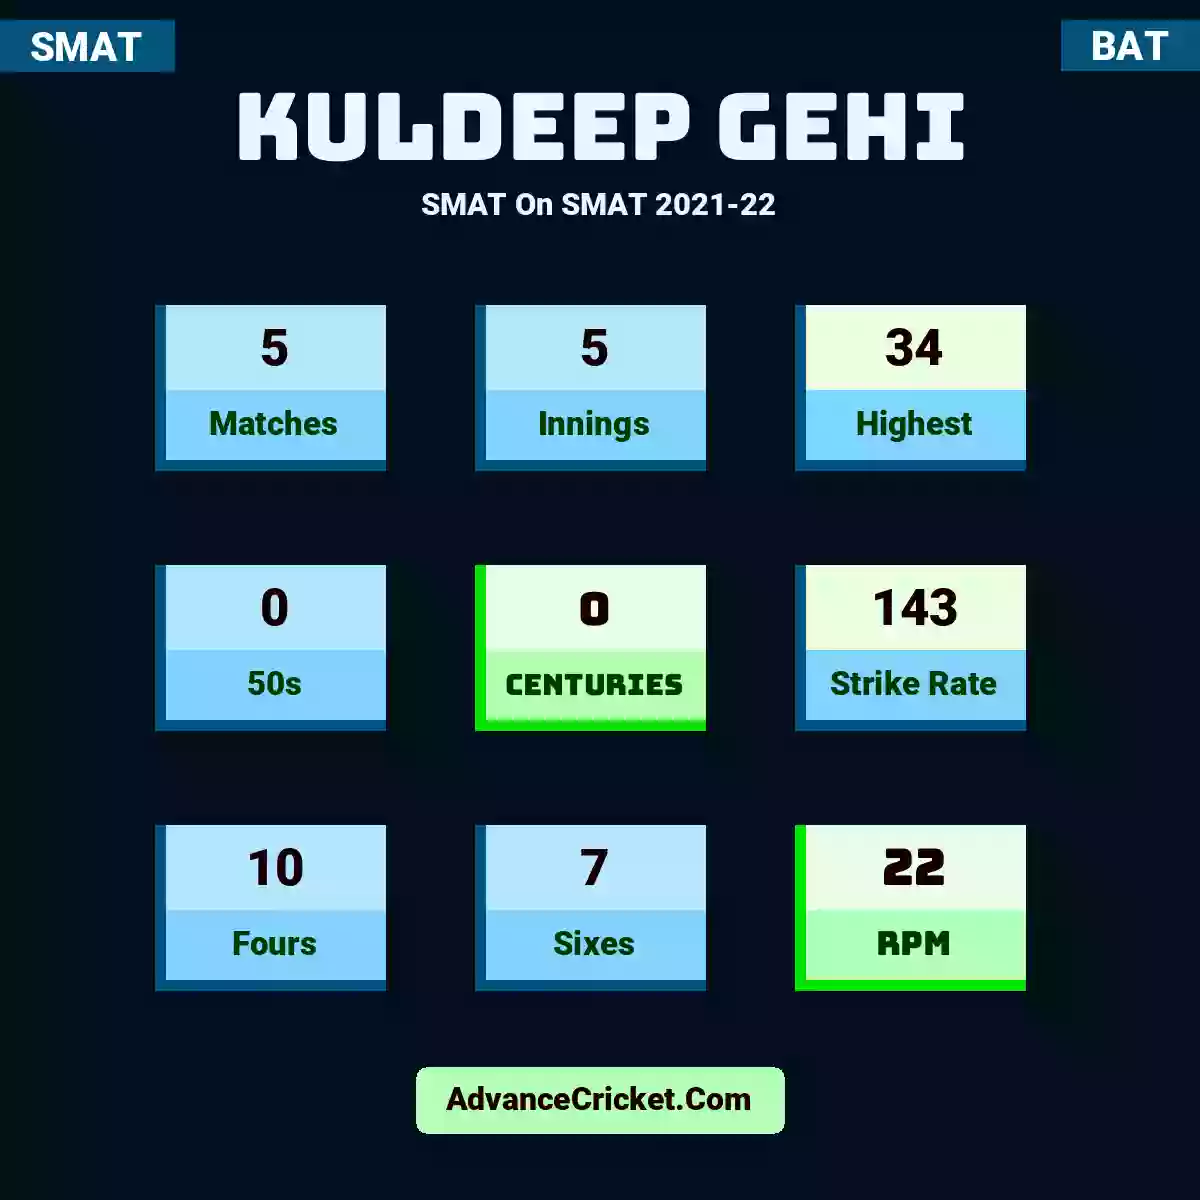 Kuldeep Gehi SMAT  On SMAT 2021-22, Kuldeep Gehi played 5 matches, scored 34 runs as highest, 0 half-centuries, and 0 centuries, with a strike rate of 143. K.Gehi hit 10 fours and 7 sixes, with an RPM of 22.